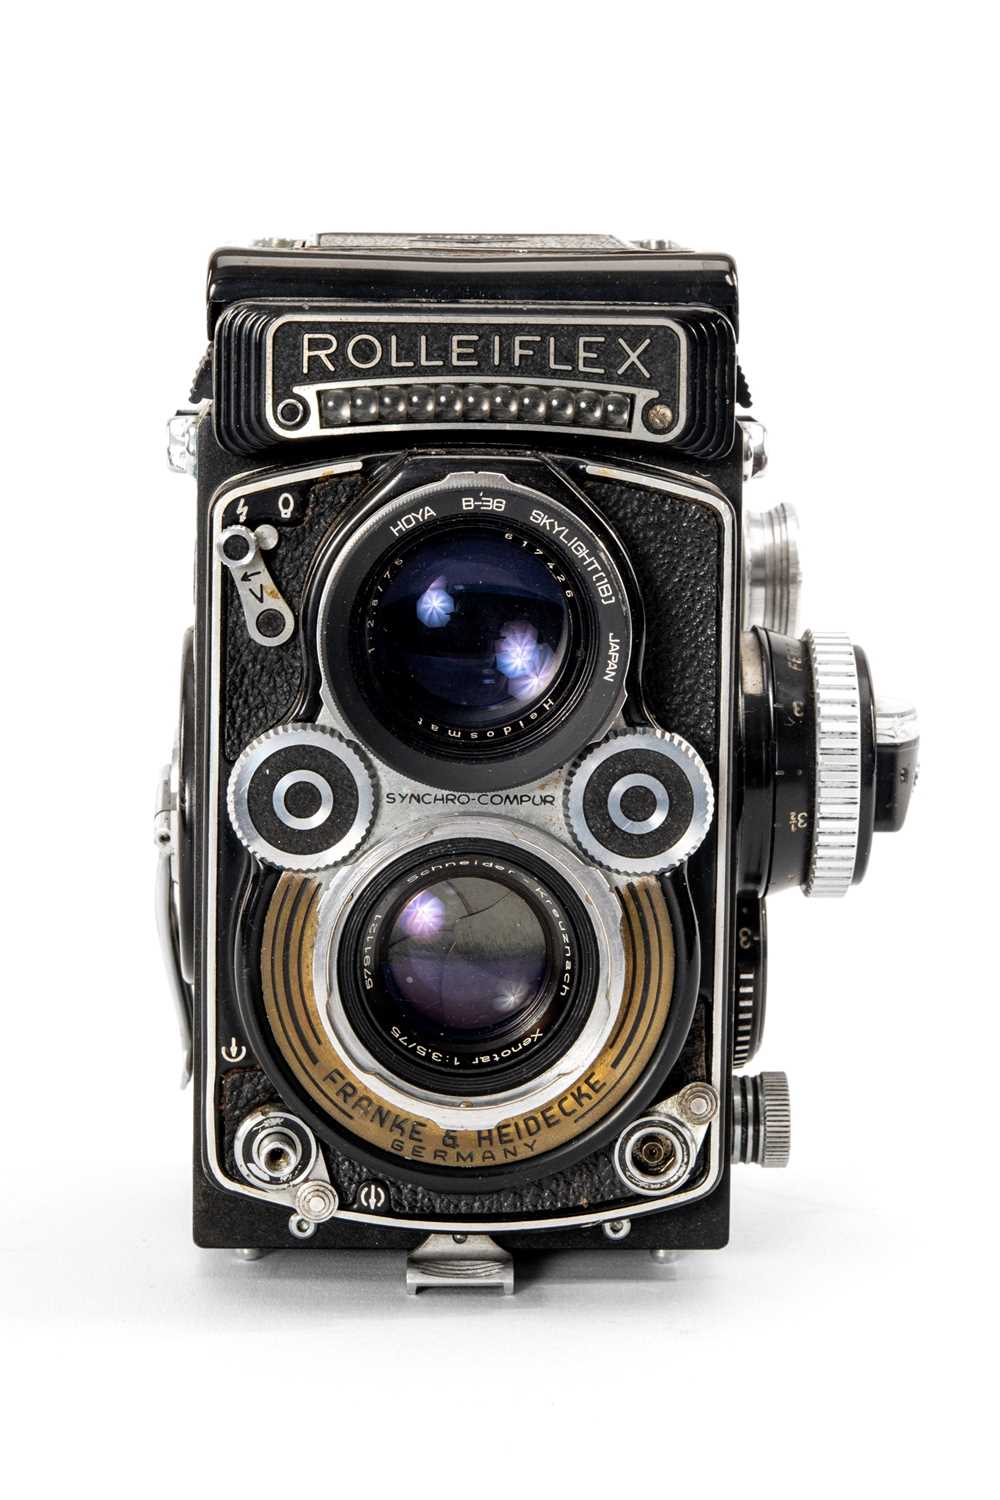 A ROLLEI F&H ROLLEIFLEX 3.5F MEDIUM FORMAT CAMERA - black, serial no. 2216285 with Schneider-